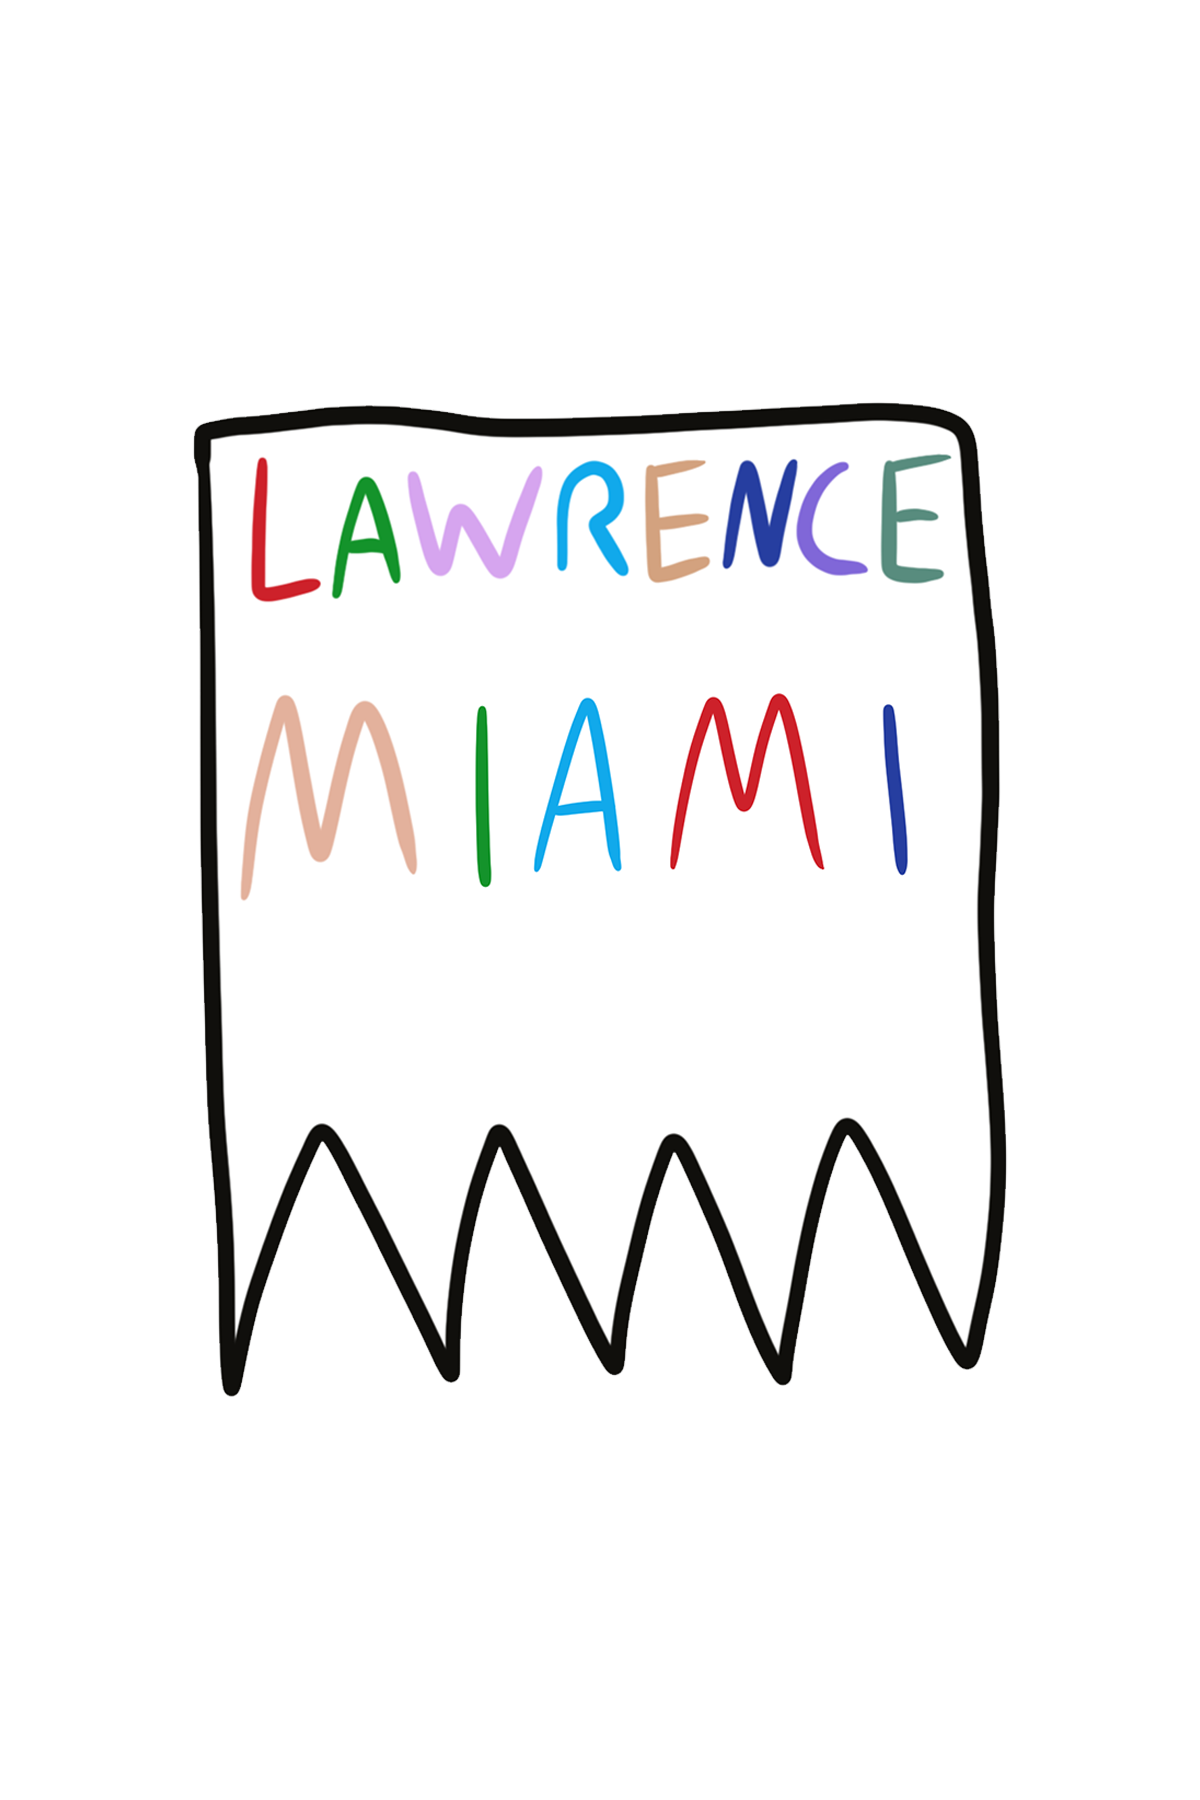 Lawrence Miami